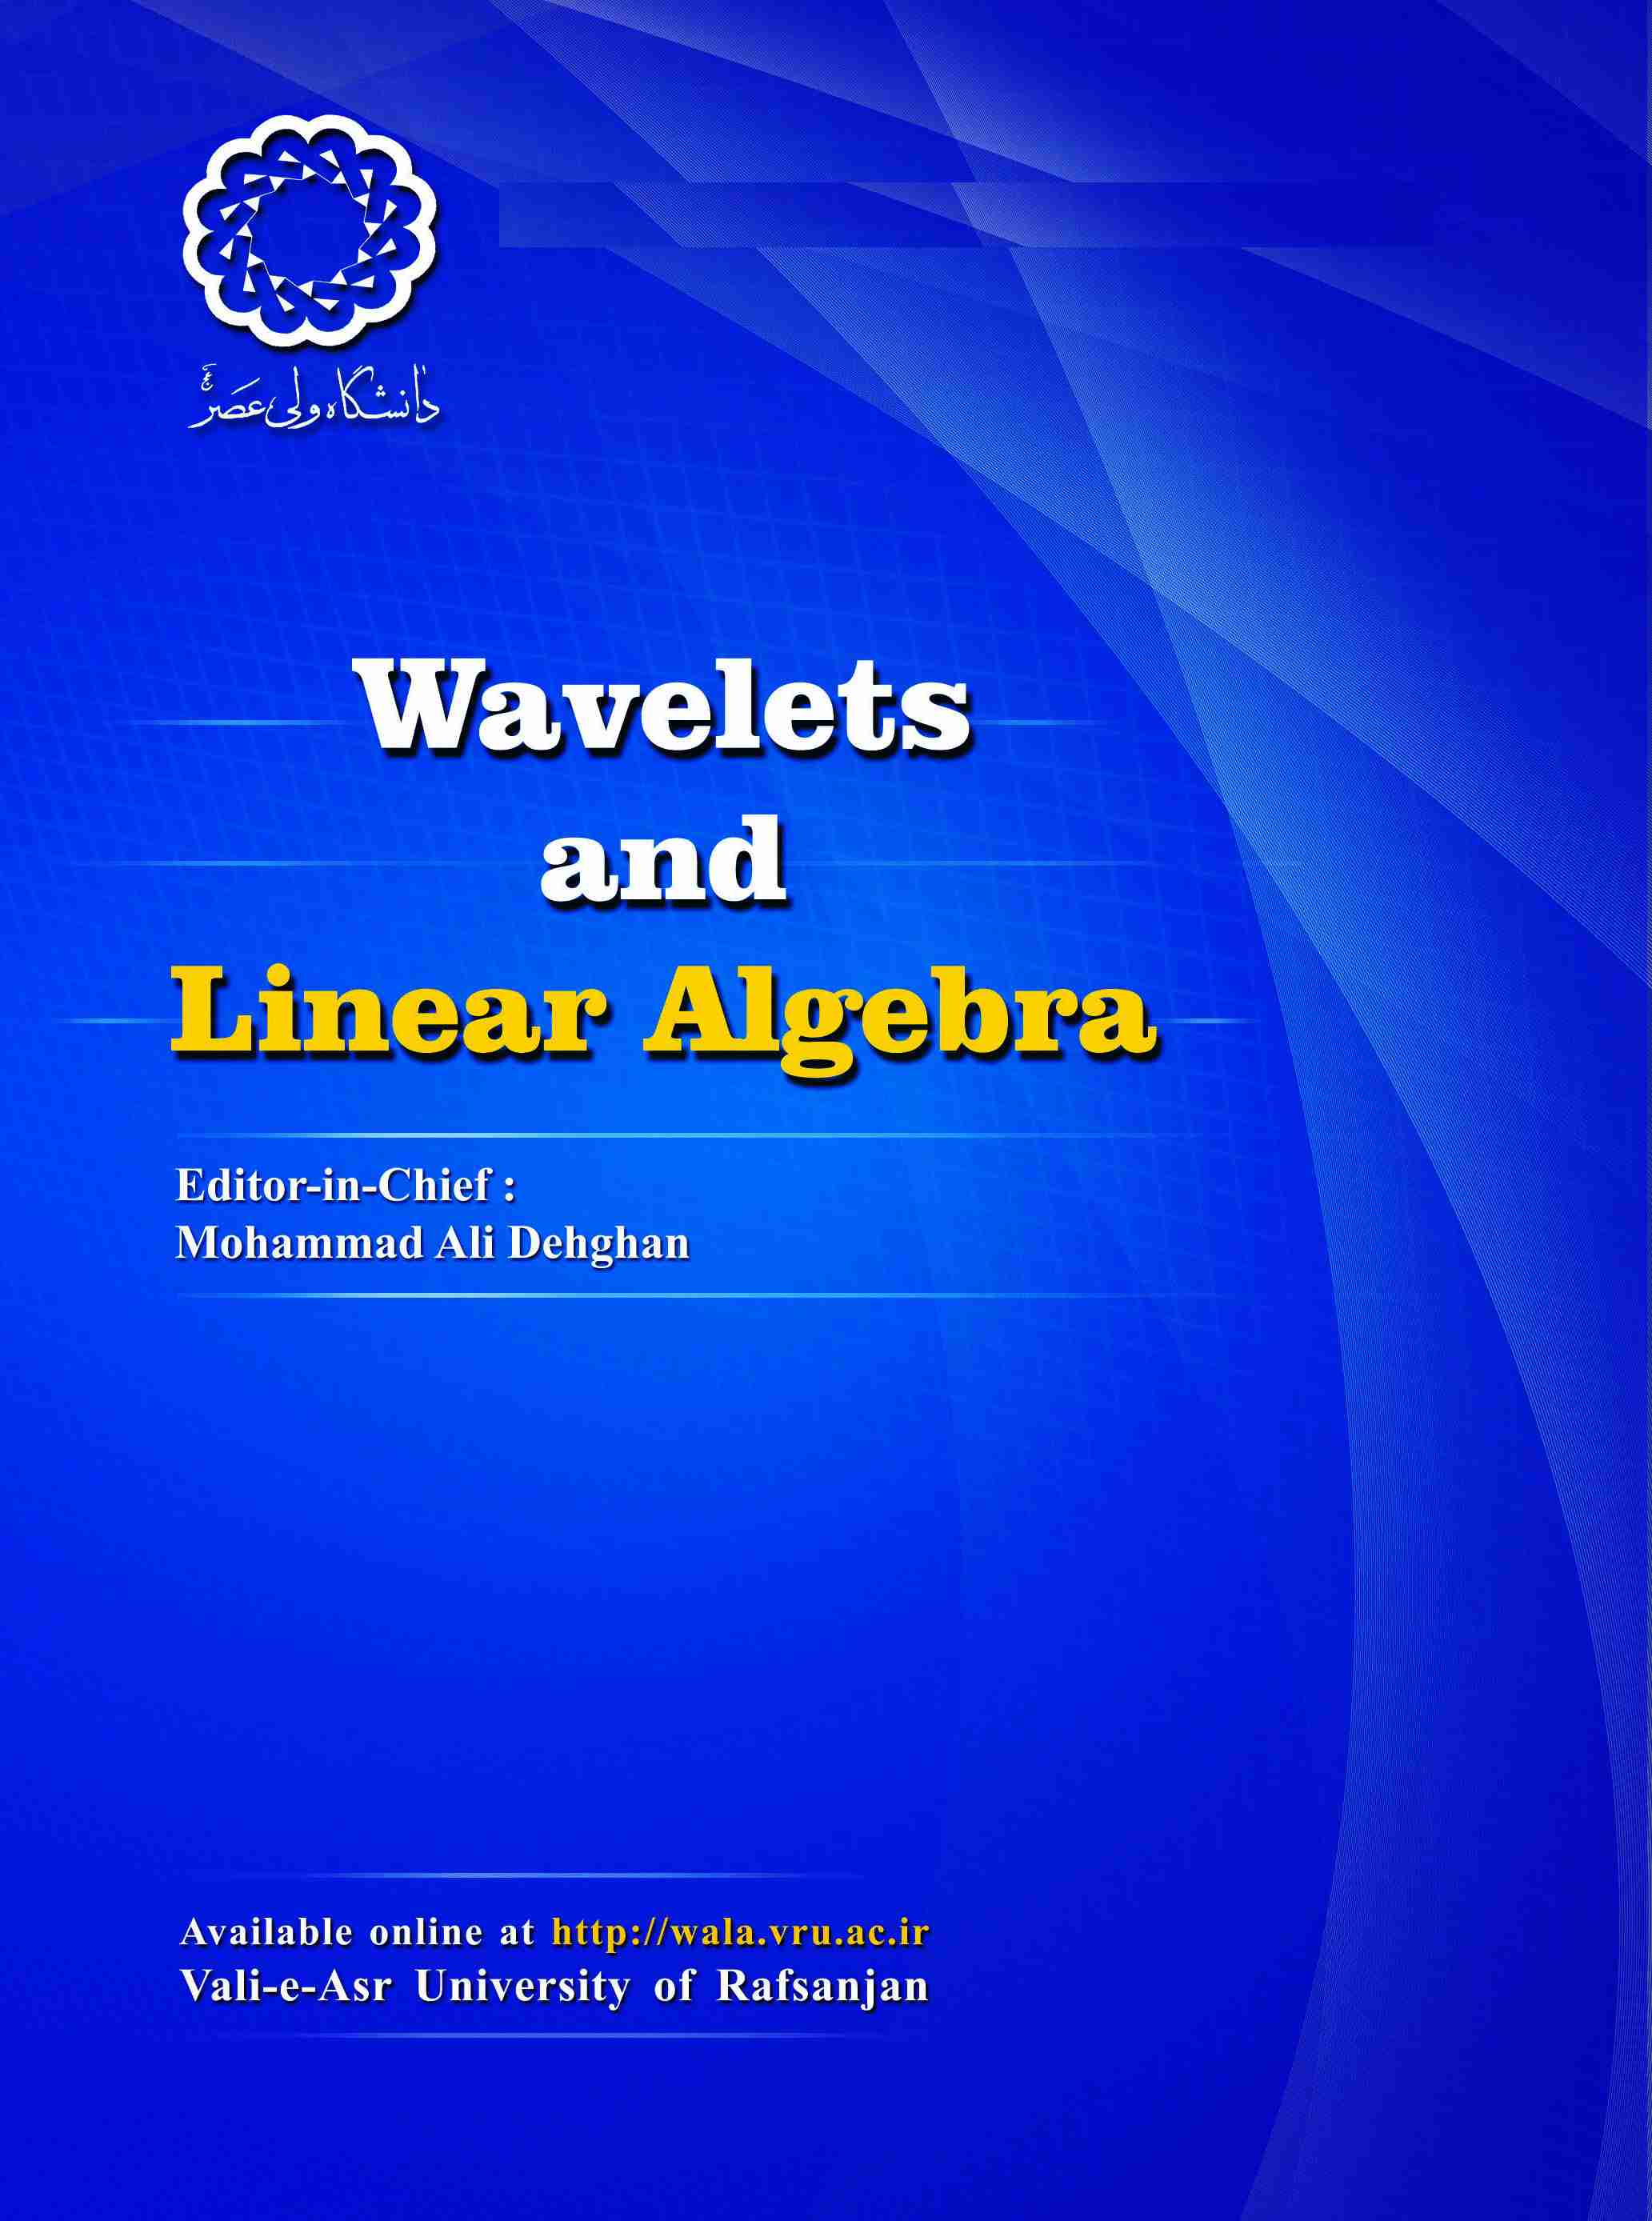 Wavelet and Linear Algebra